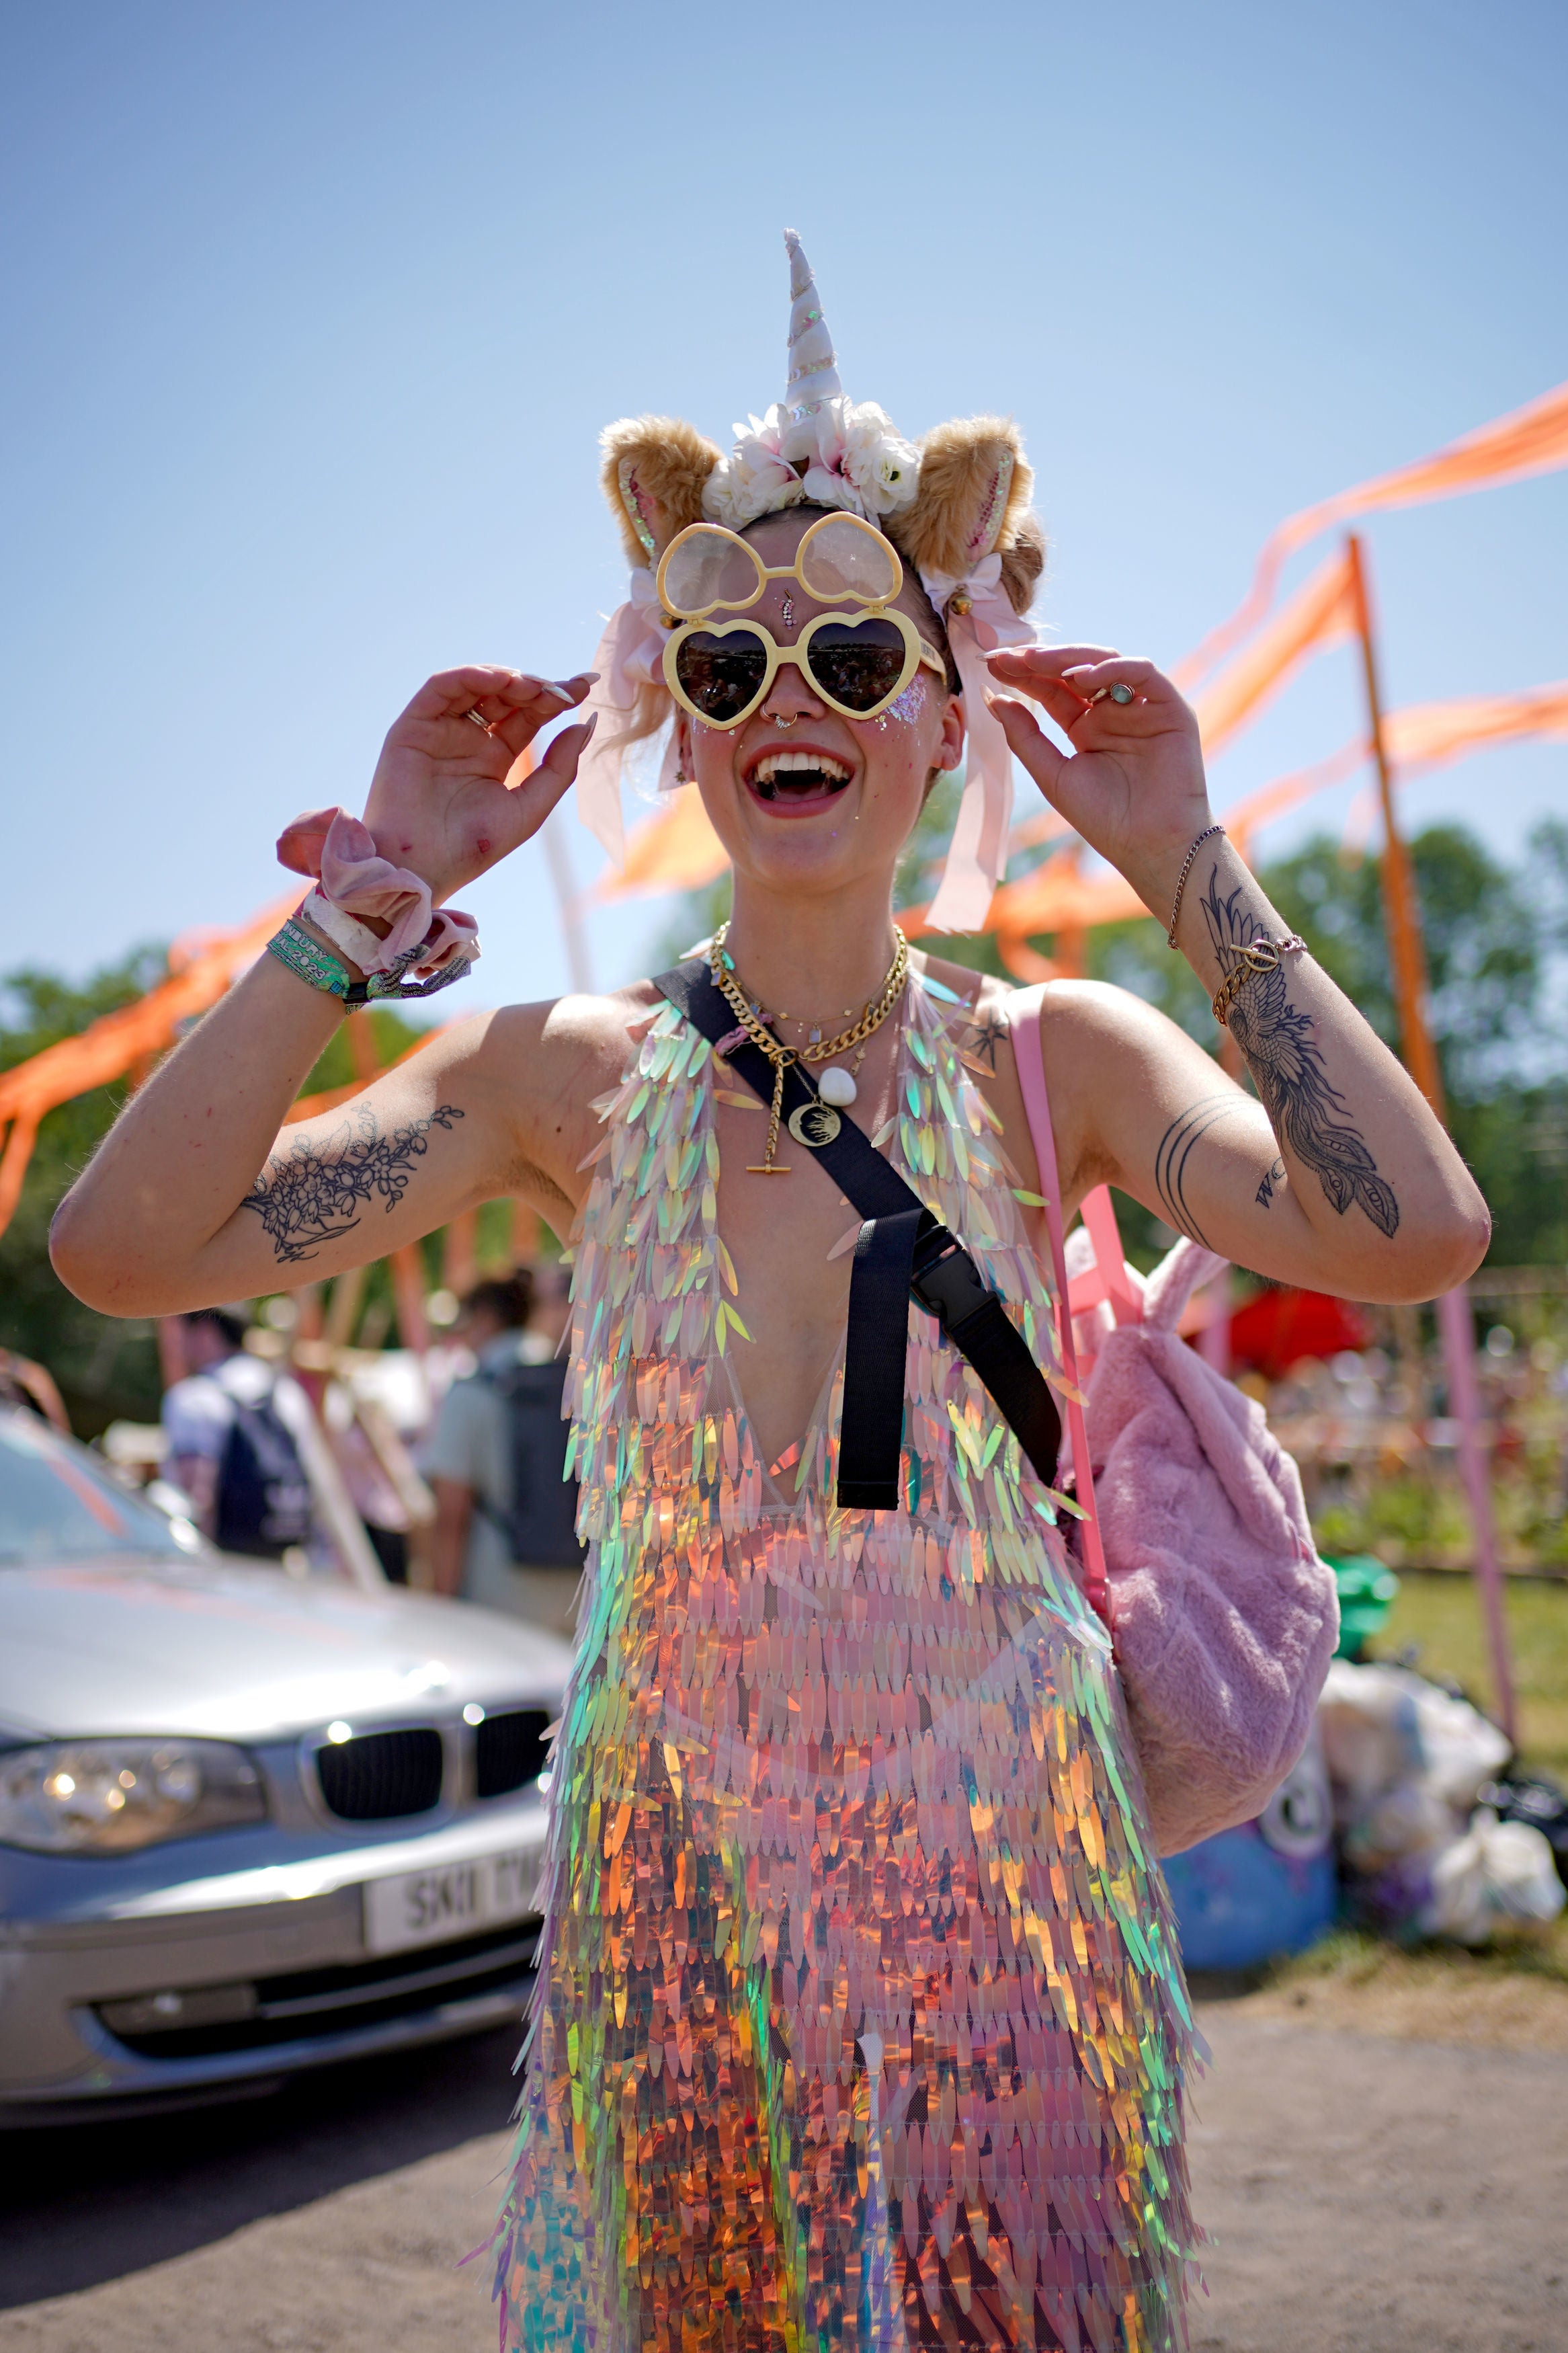 A festivalgoer in a unicorn headband and heart-shaped sunglasses at the Glastonbury Festival